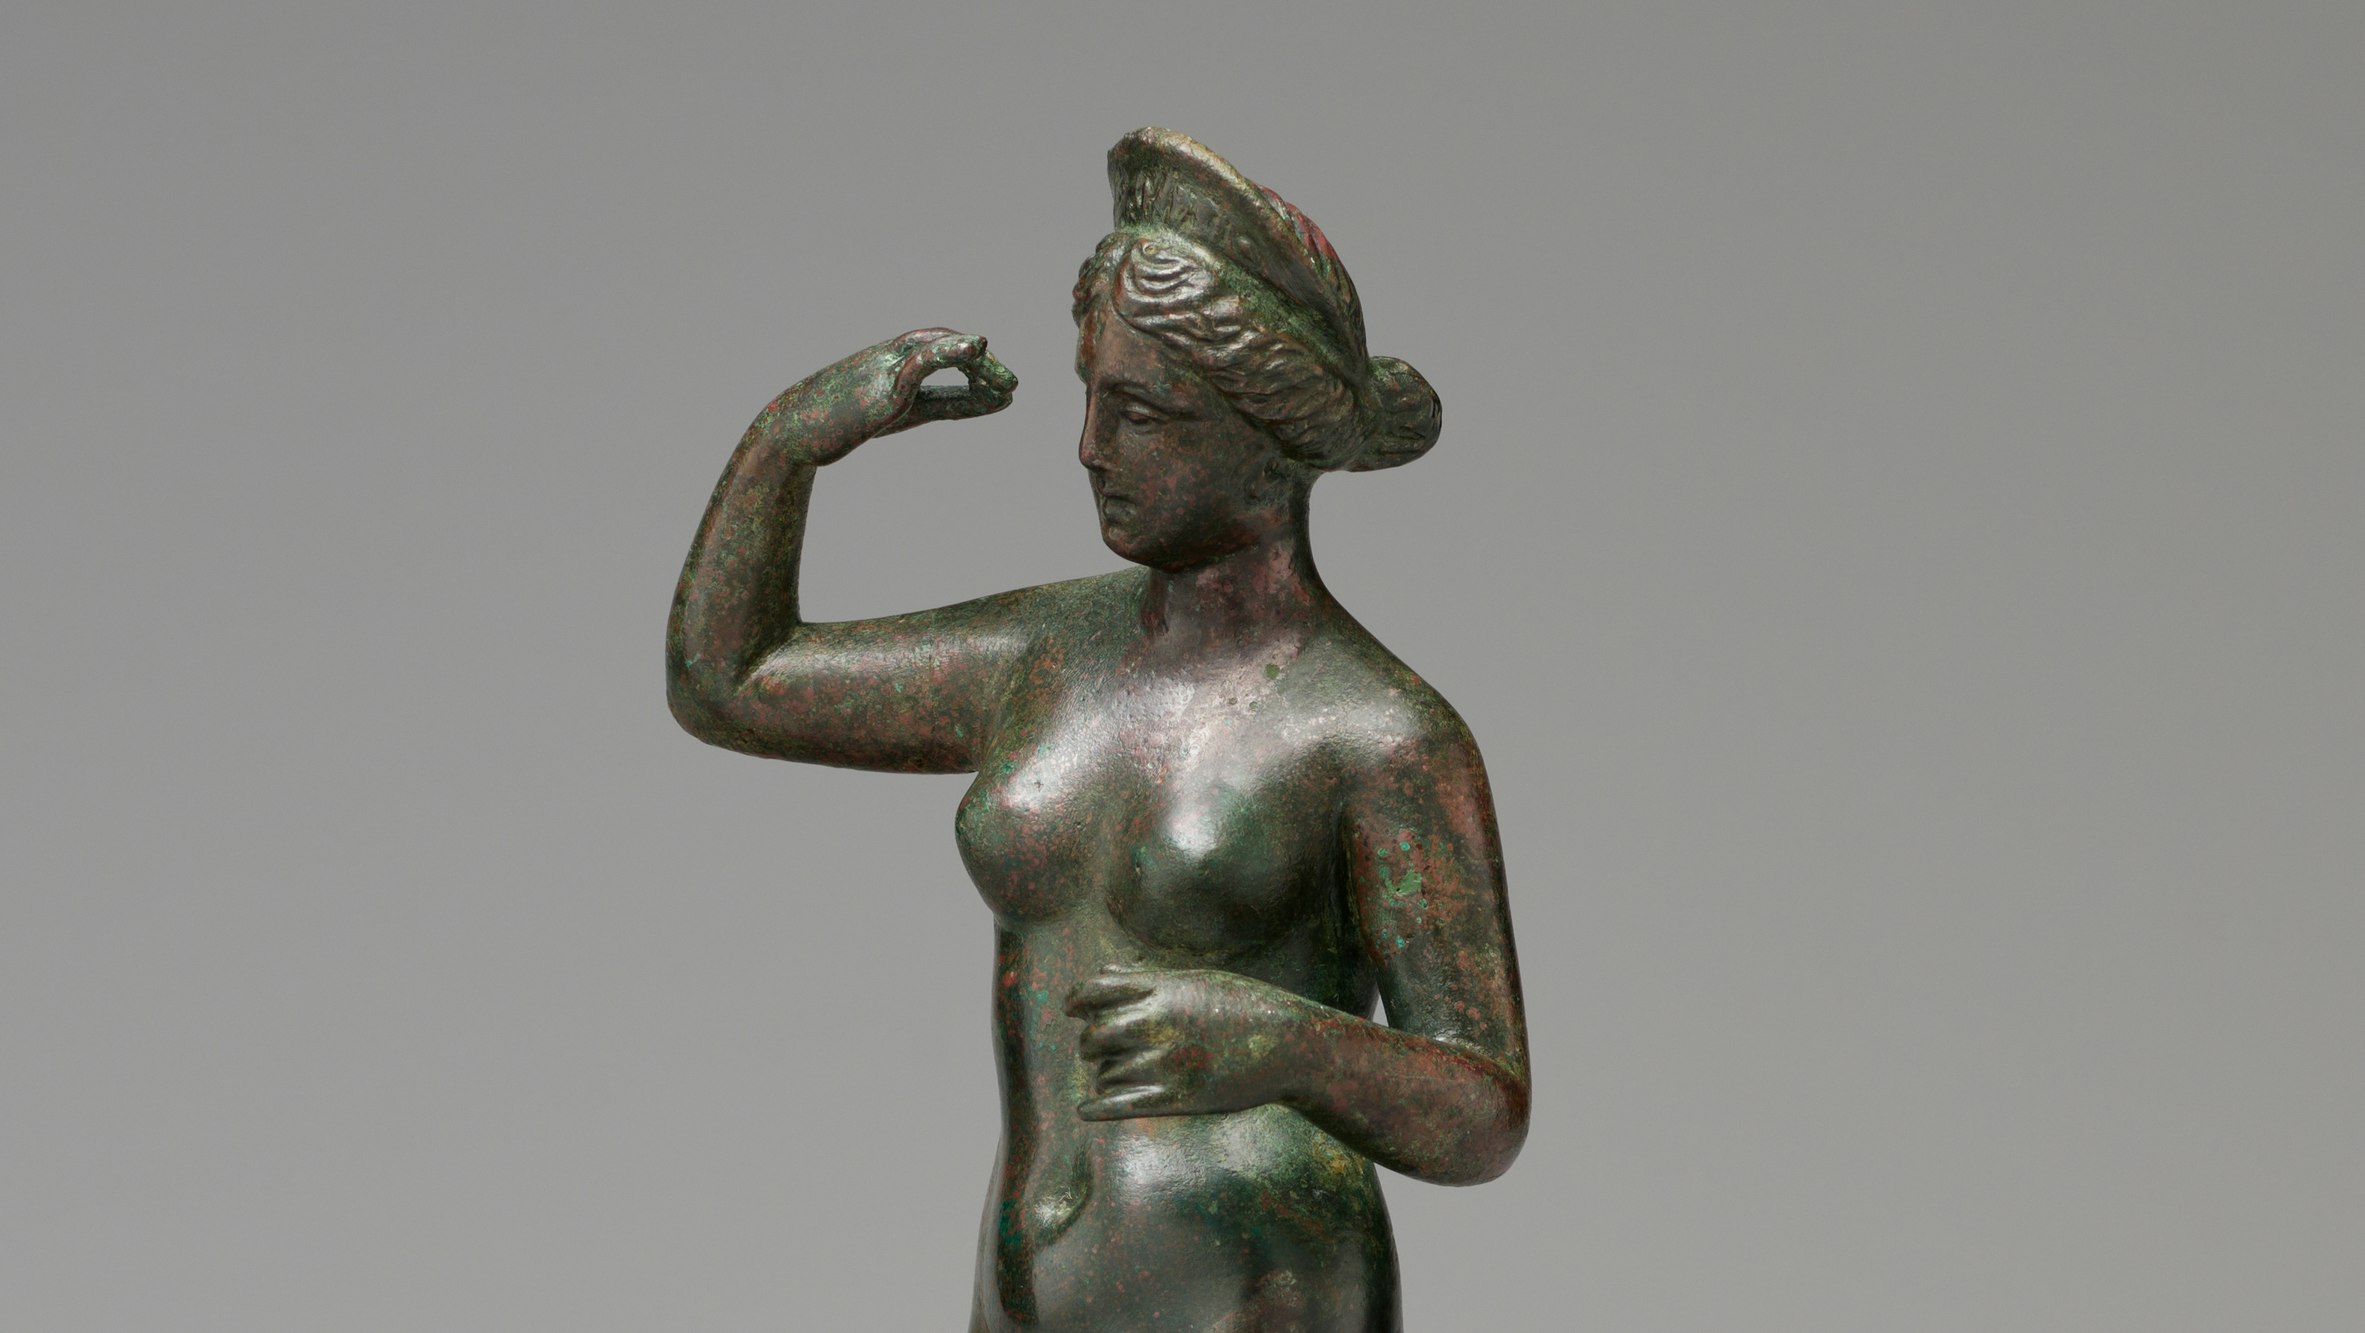 Statuette of Venus